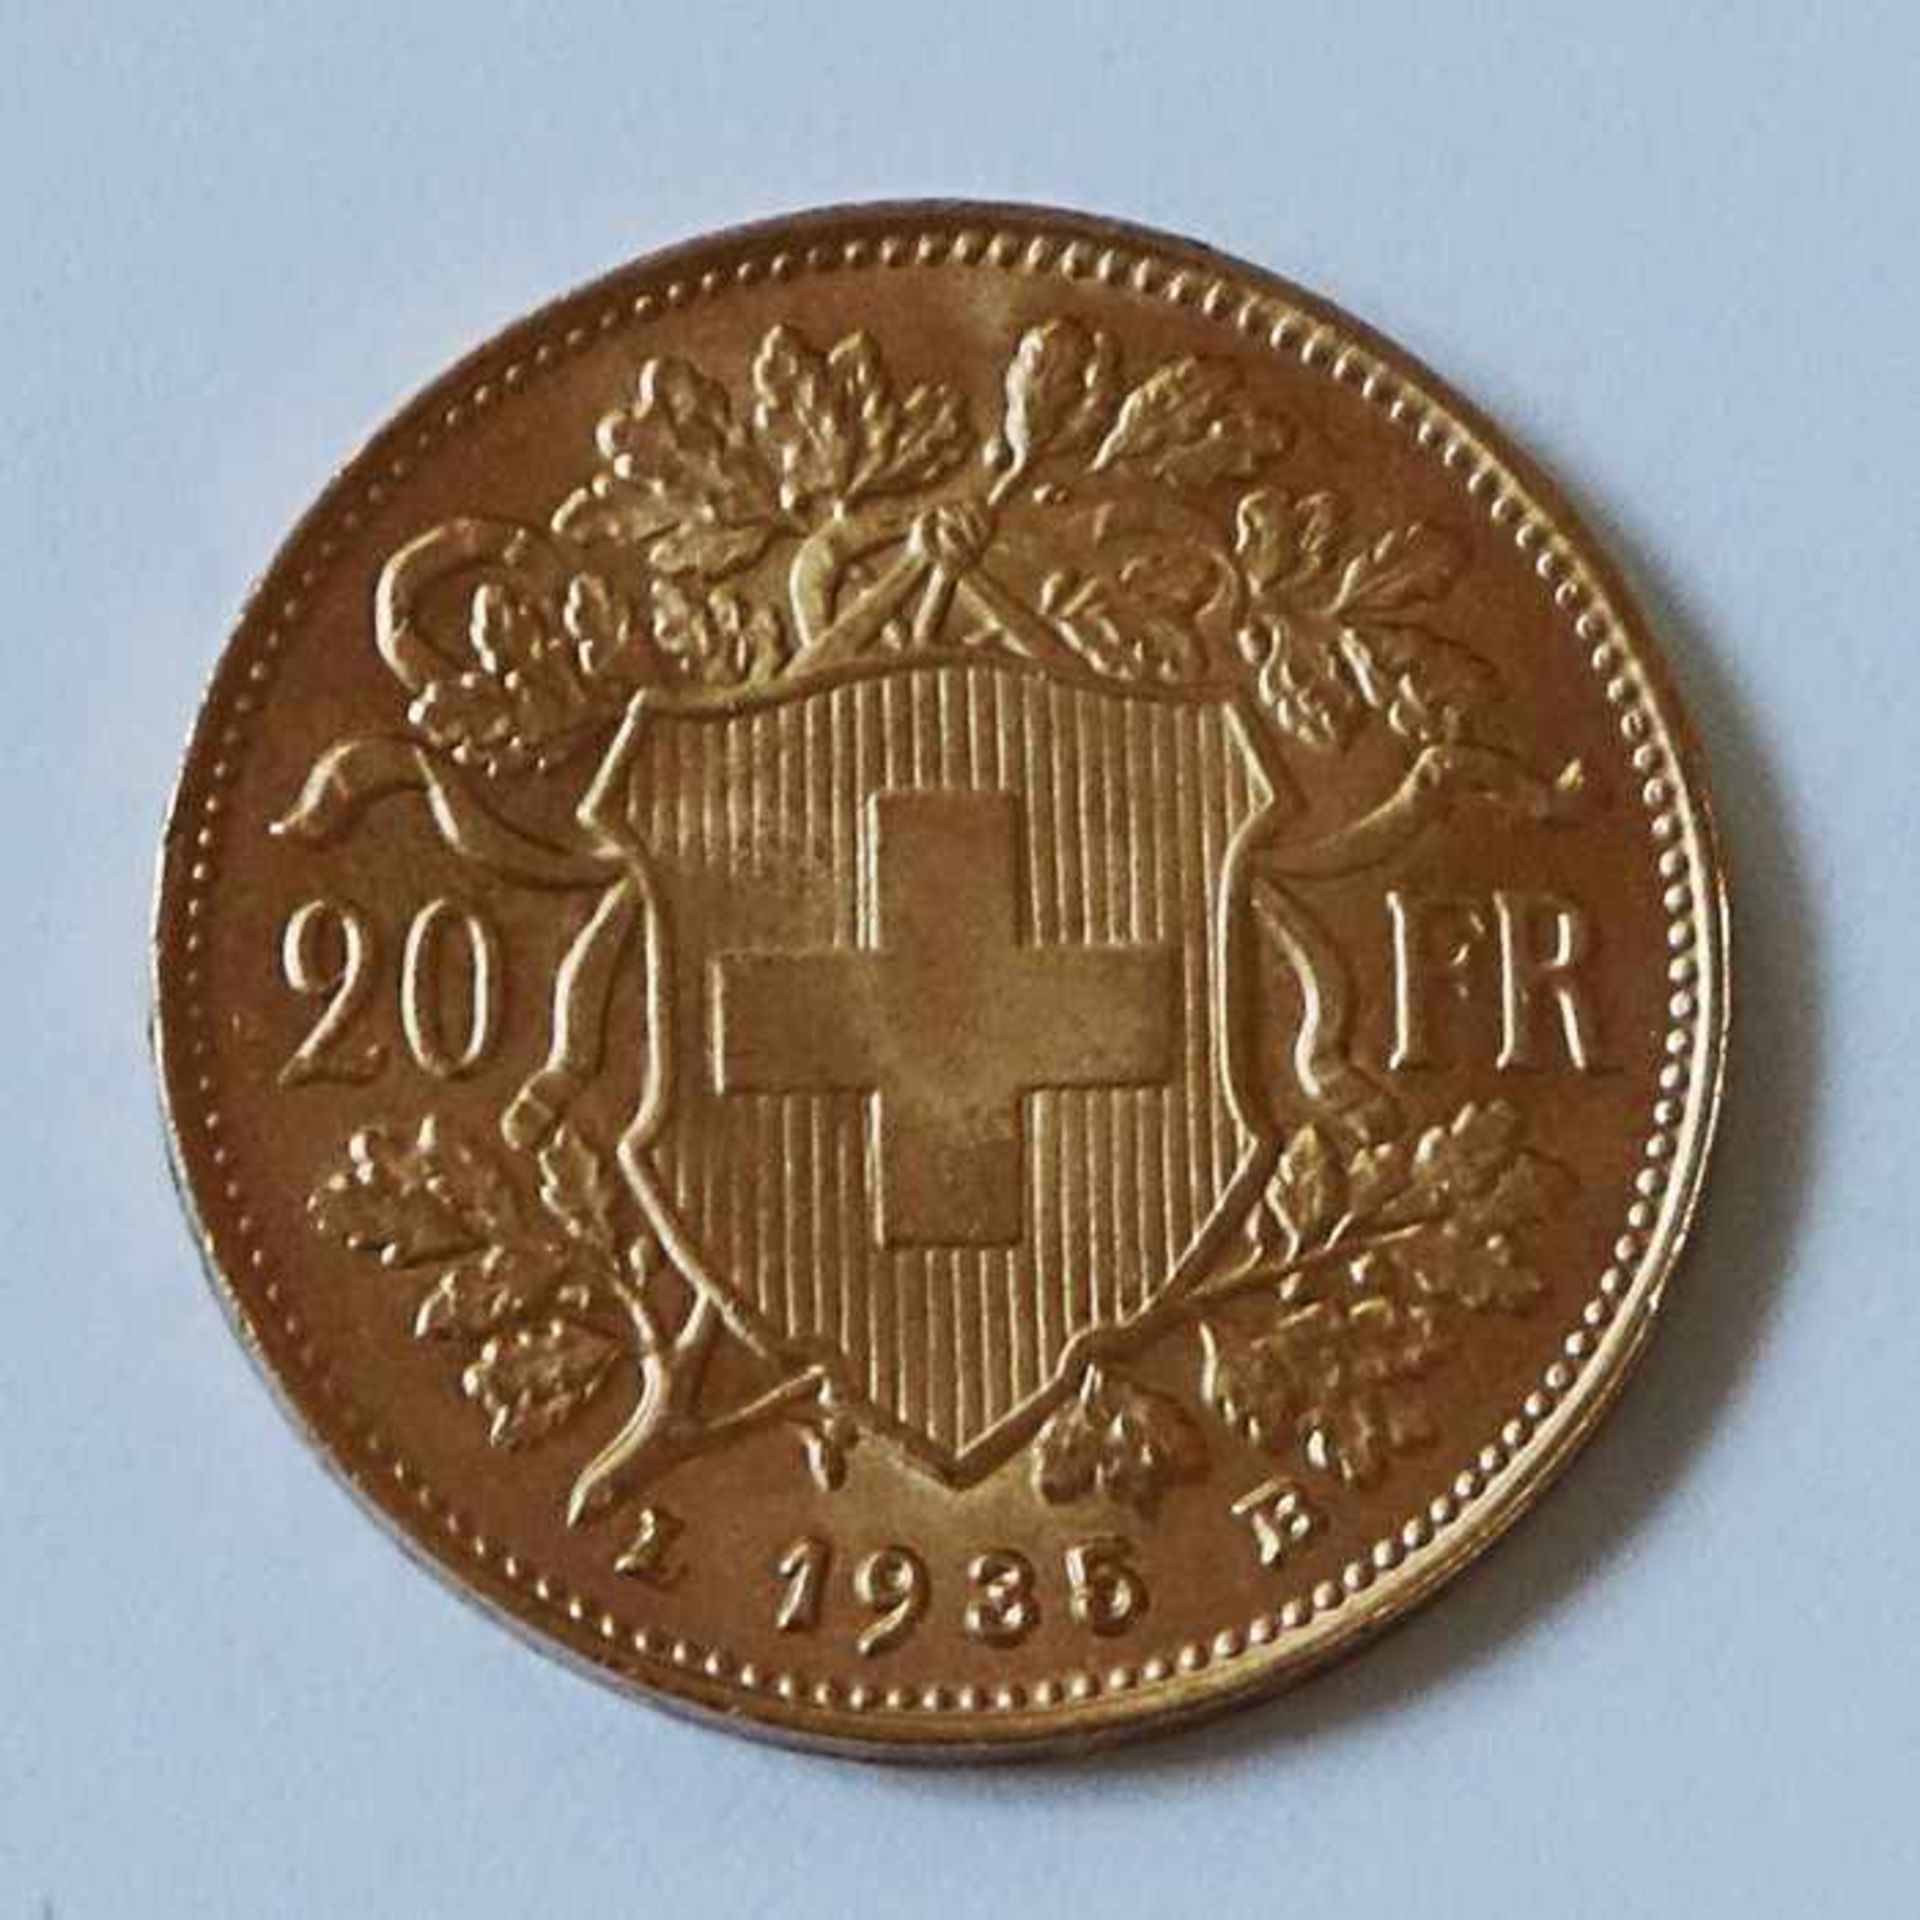 Gold - Schweiz 20 Franken 1935Schweizer Vreneli, LB, D 21mm, G 6,45g, vz - Bild 4 aus 4